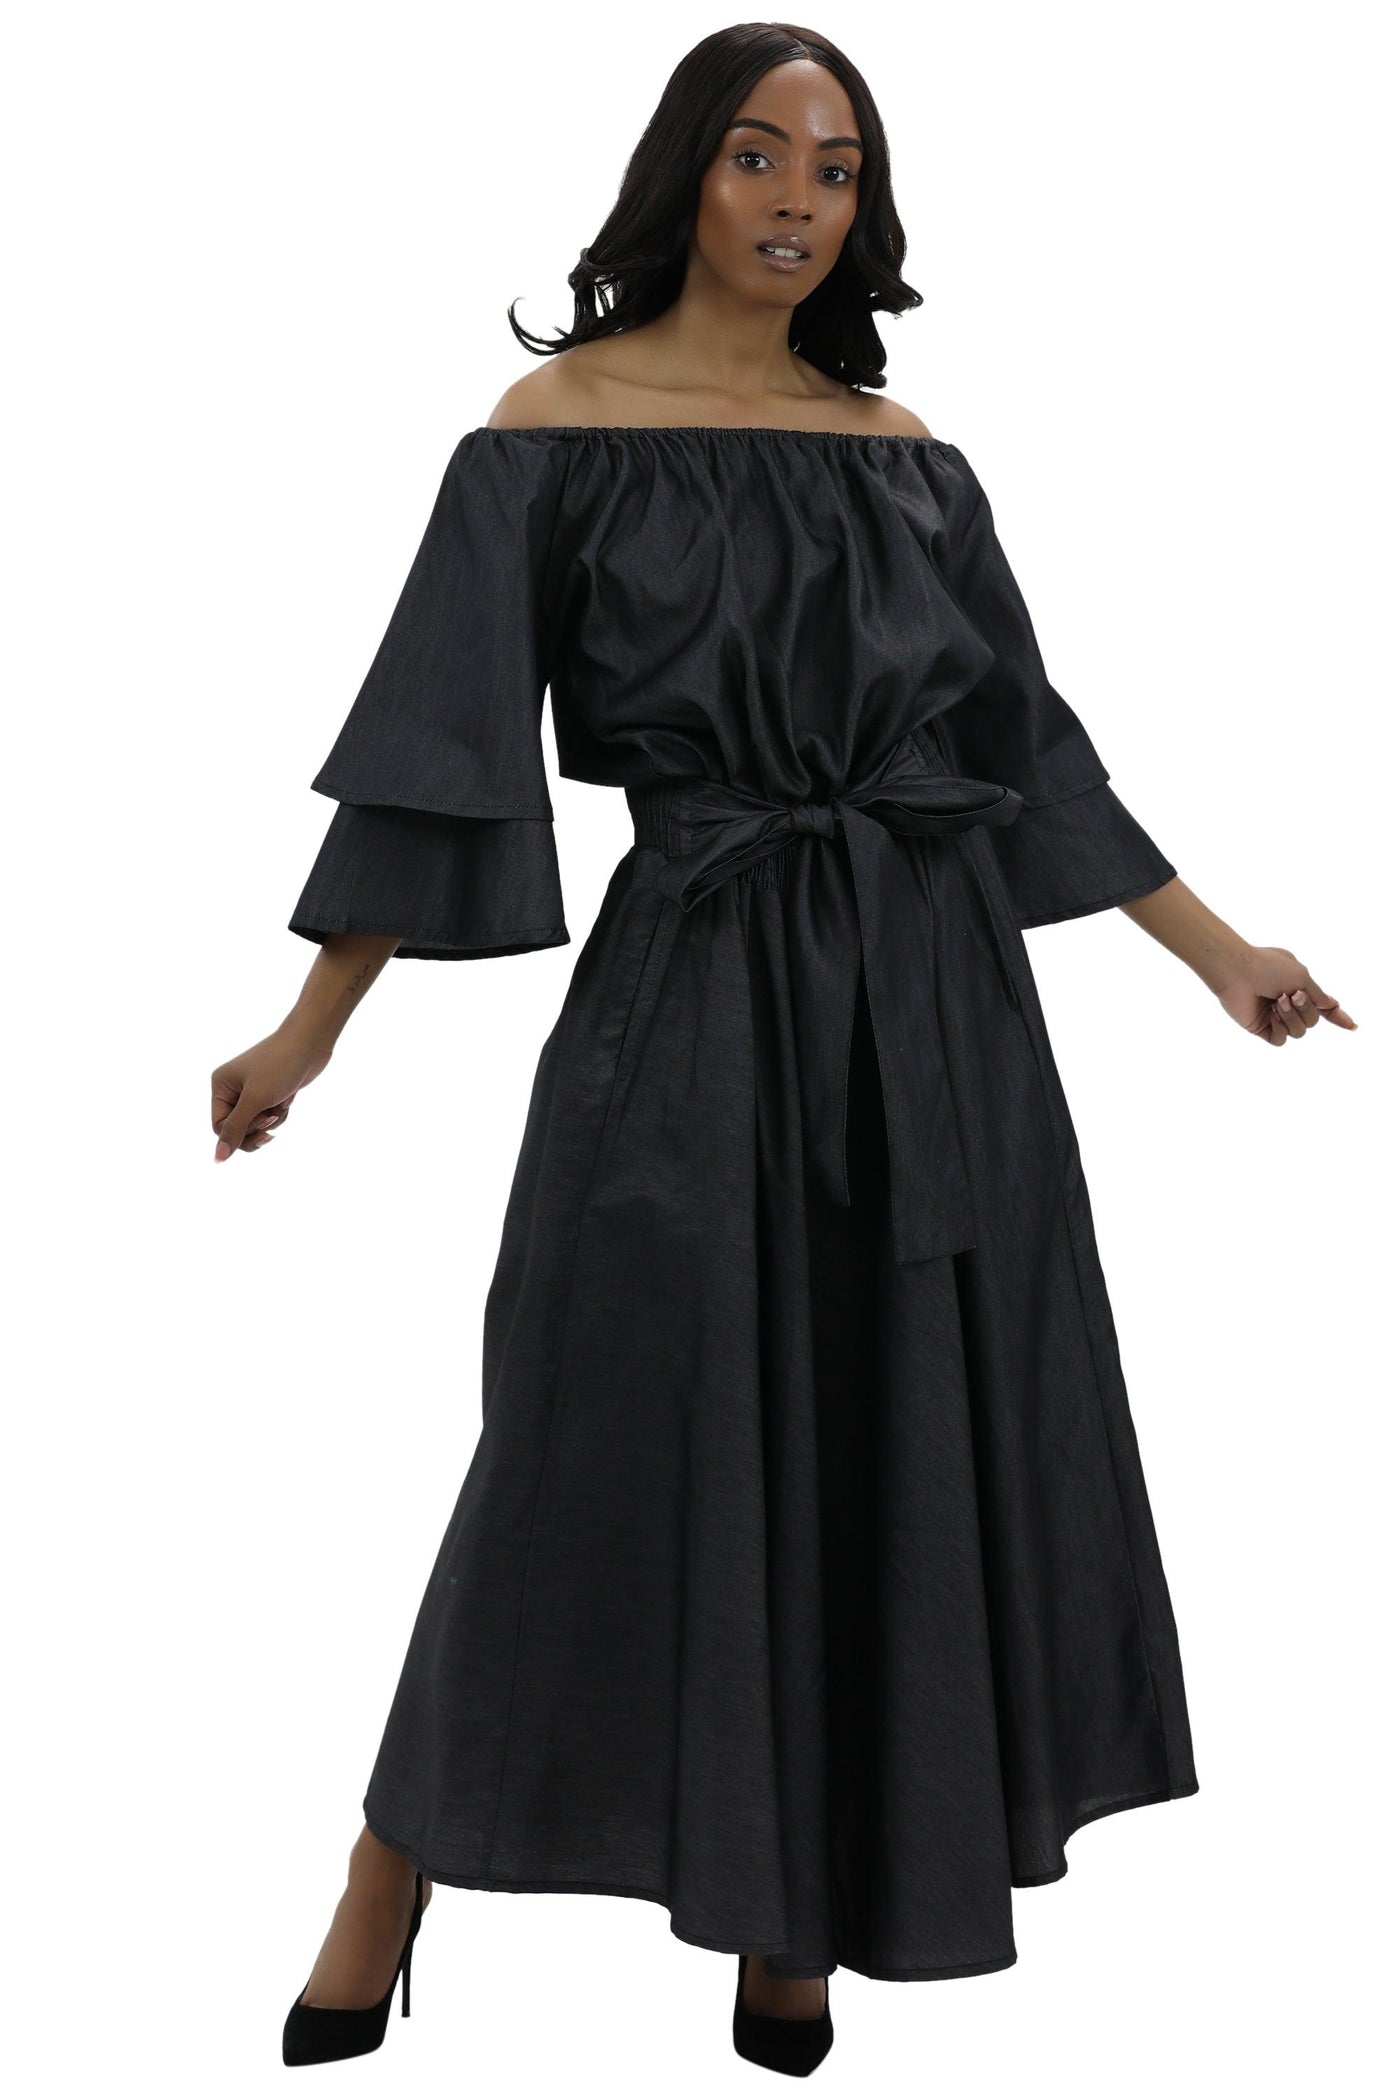 Princess Ankara Denim Dress 2197-BLACK